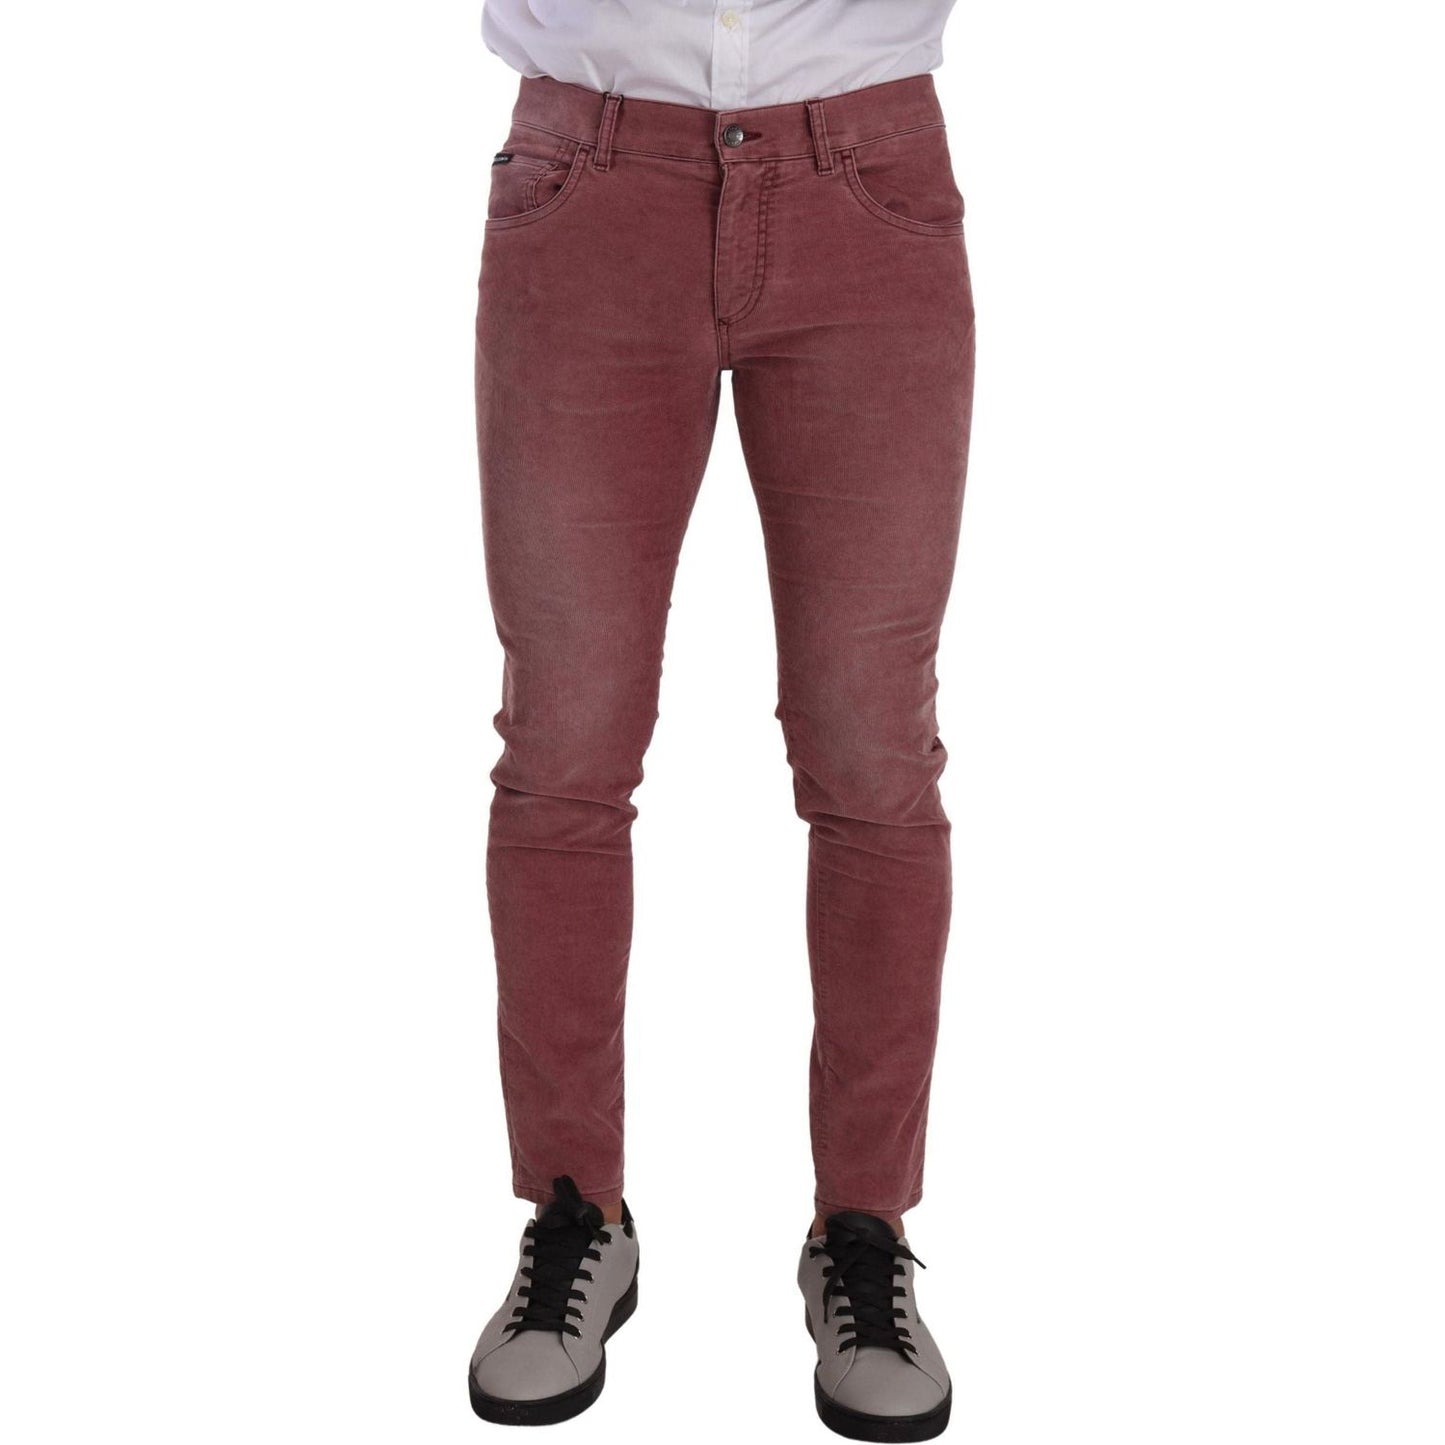 Dolce & Gabbana Elegant Slim Fit Corduroy Jeans pink-corduroy-cotton-skinny-men-denim-jeans IMG_1589-scaled-3d548160-709.jpg